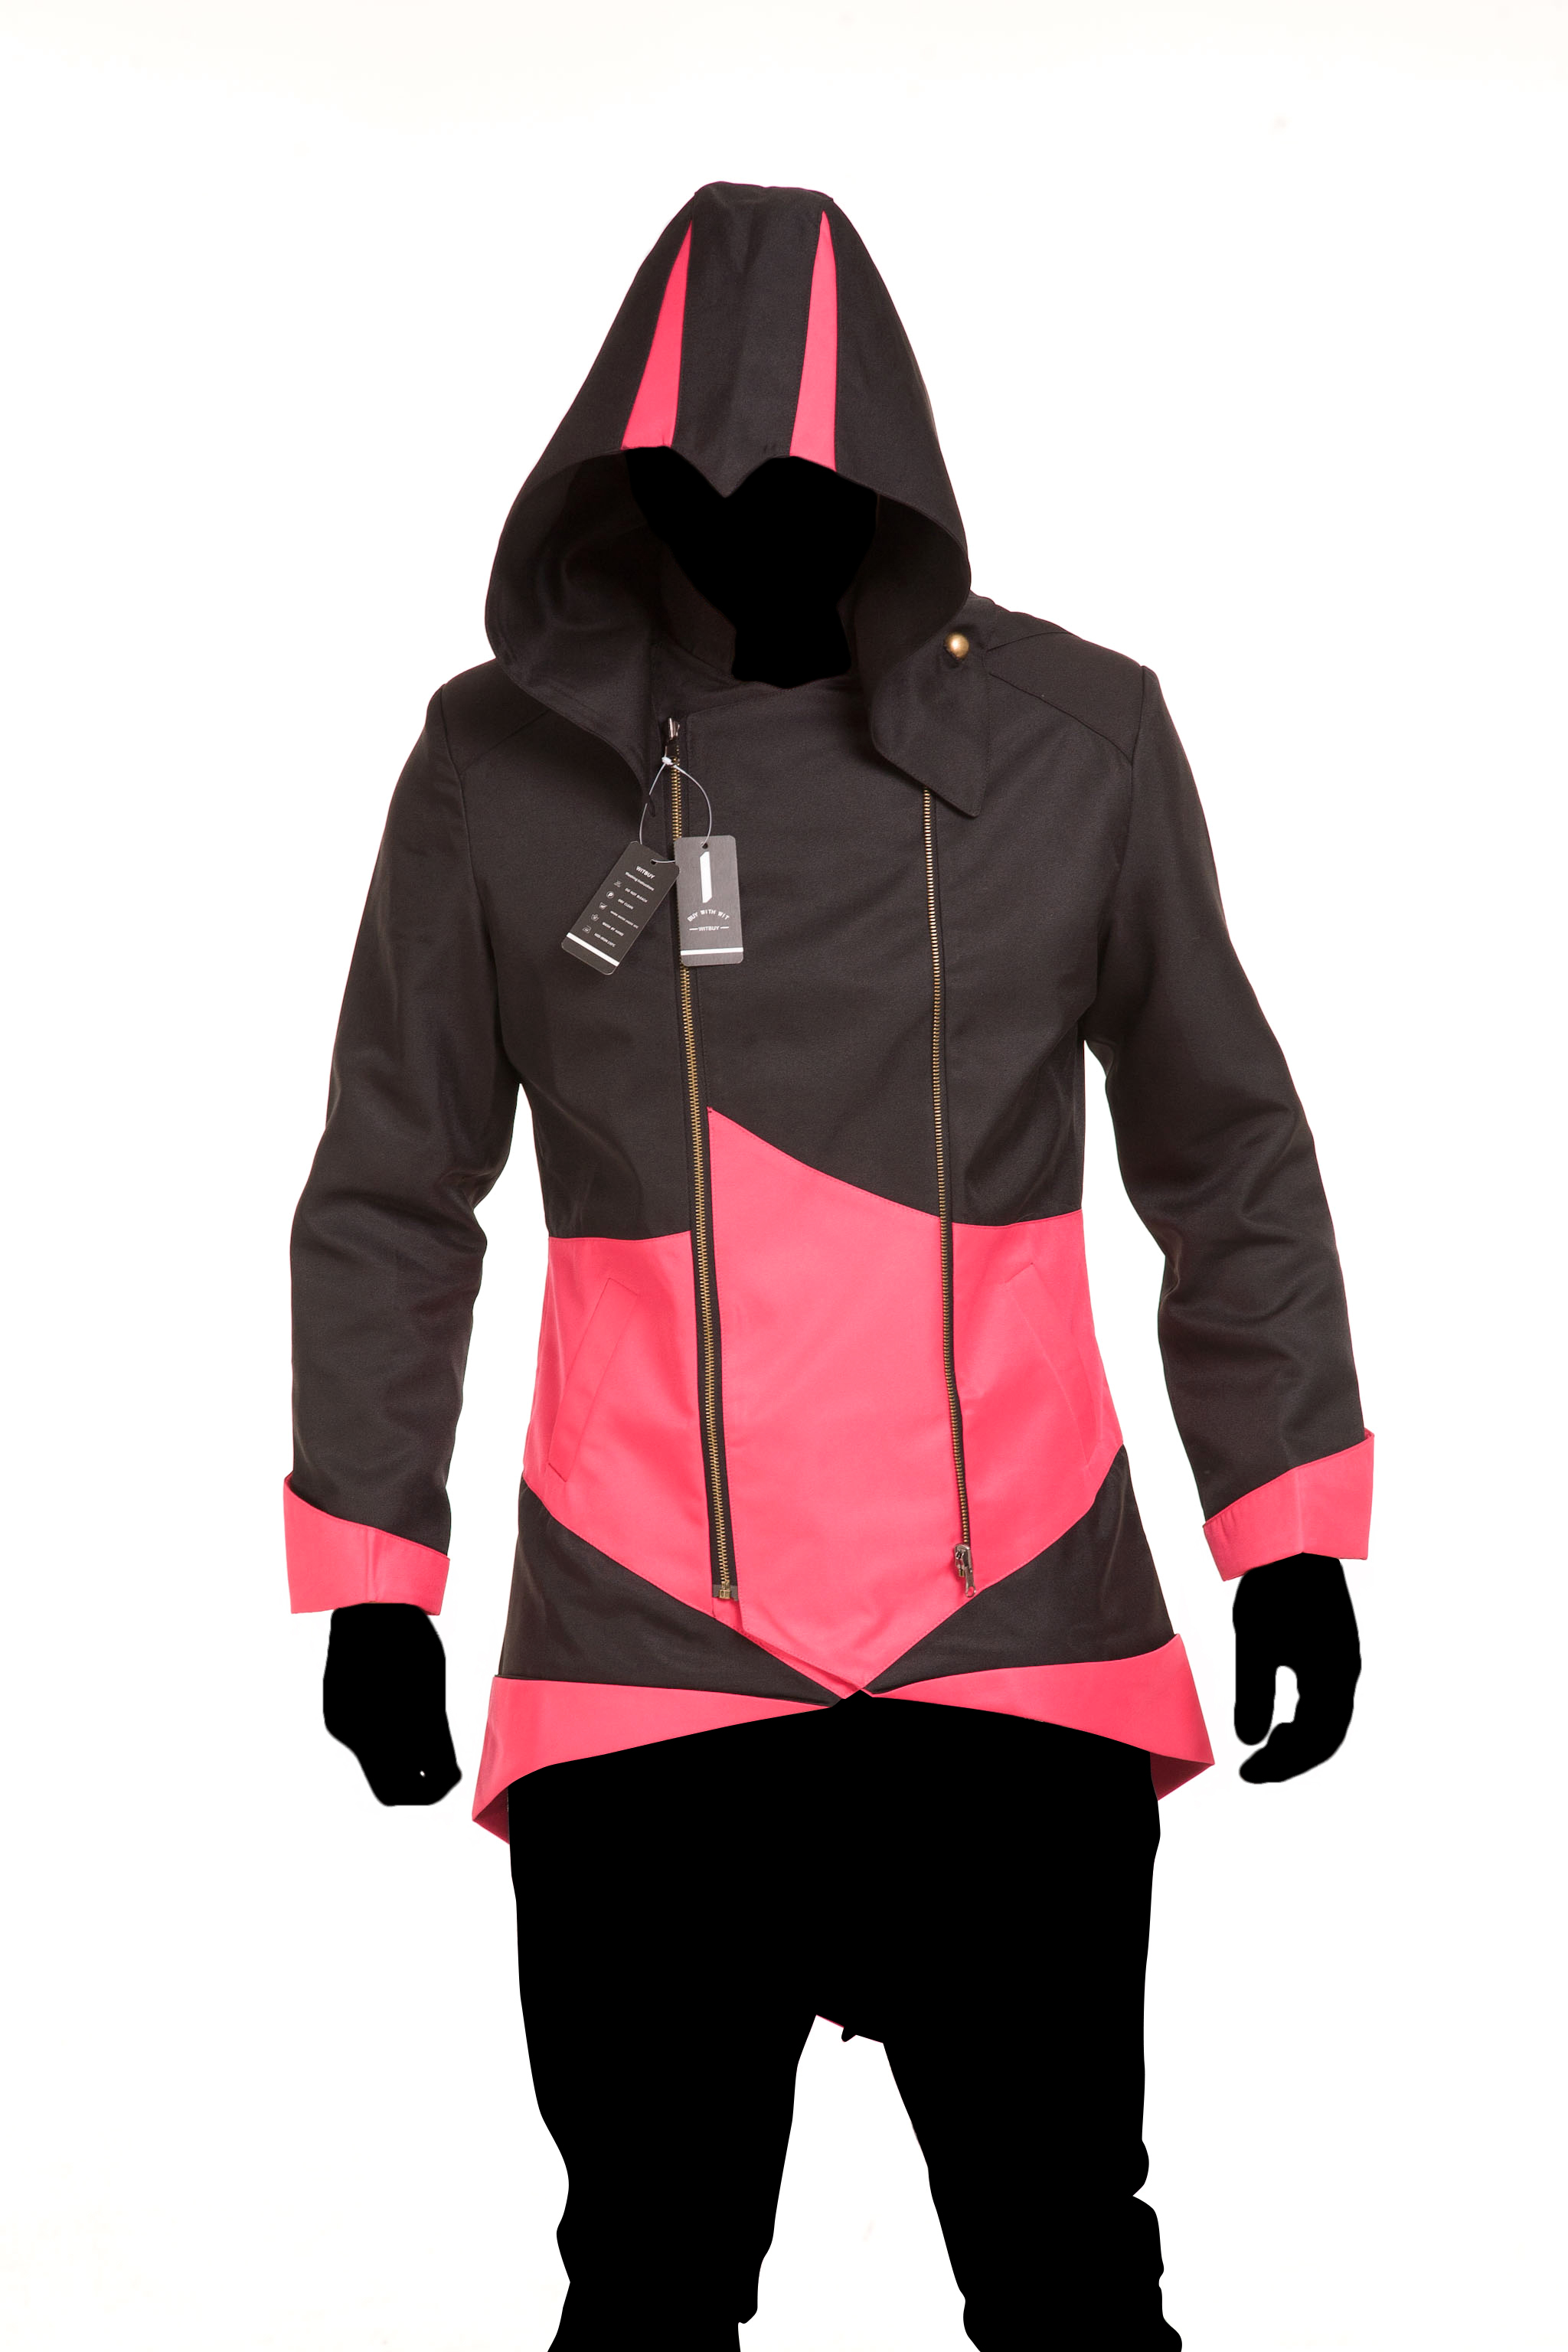 Assassins Creed 3 Connor Kenway Coat Jacket Hoodie Black Fuchsia